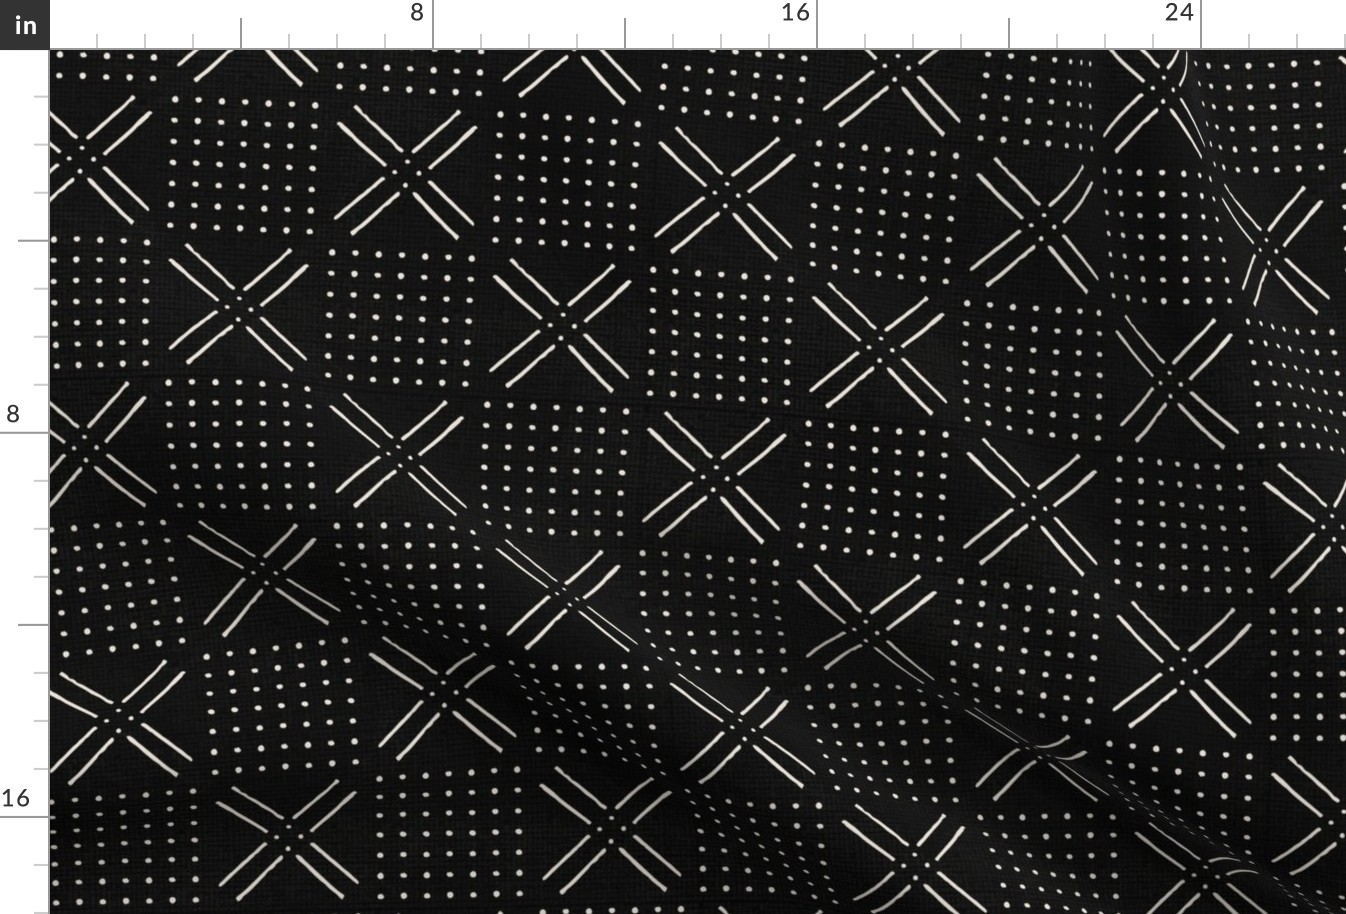 black mud cloth woven-look X Checkers Medium scale